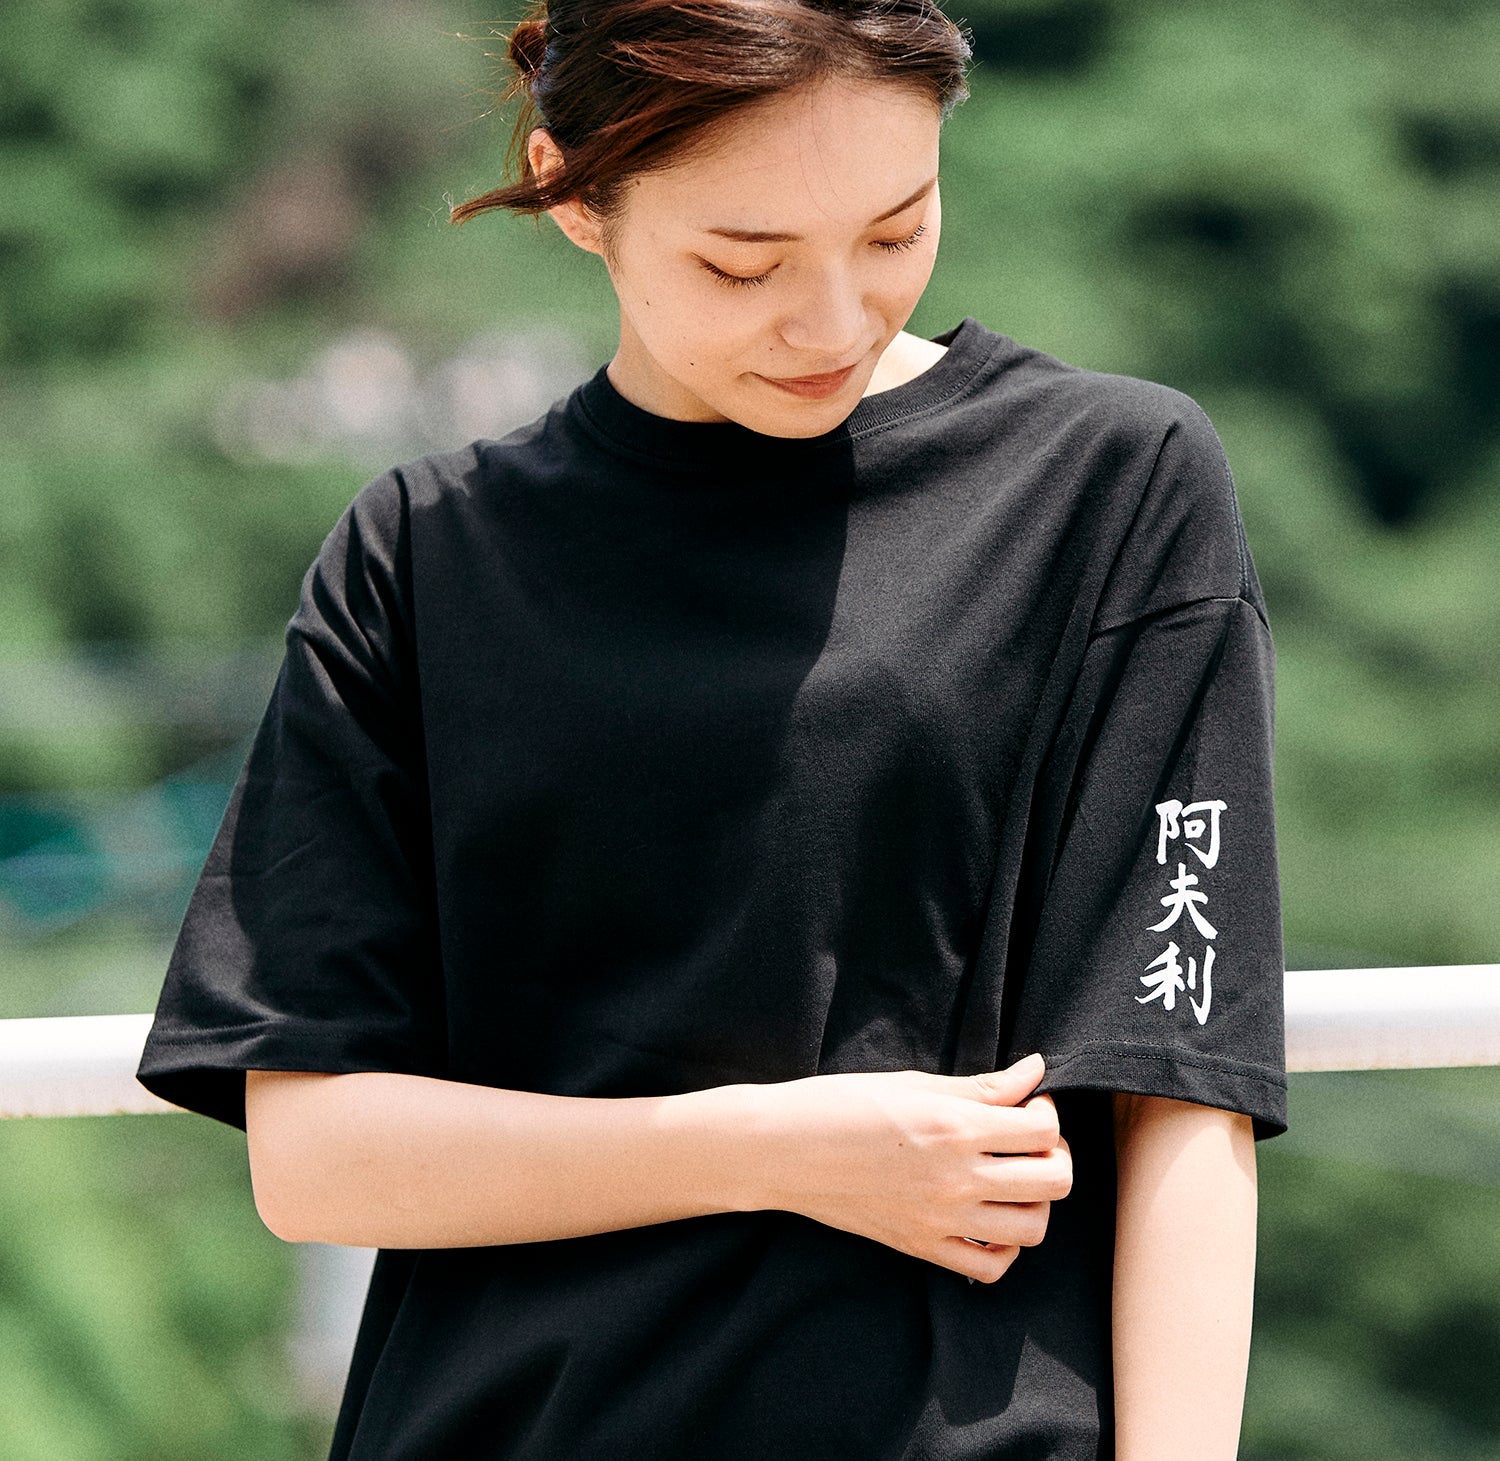 AFURI 20TH ANNIVERSARY / Big silhouette T-shirt（BLACK）